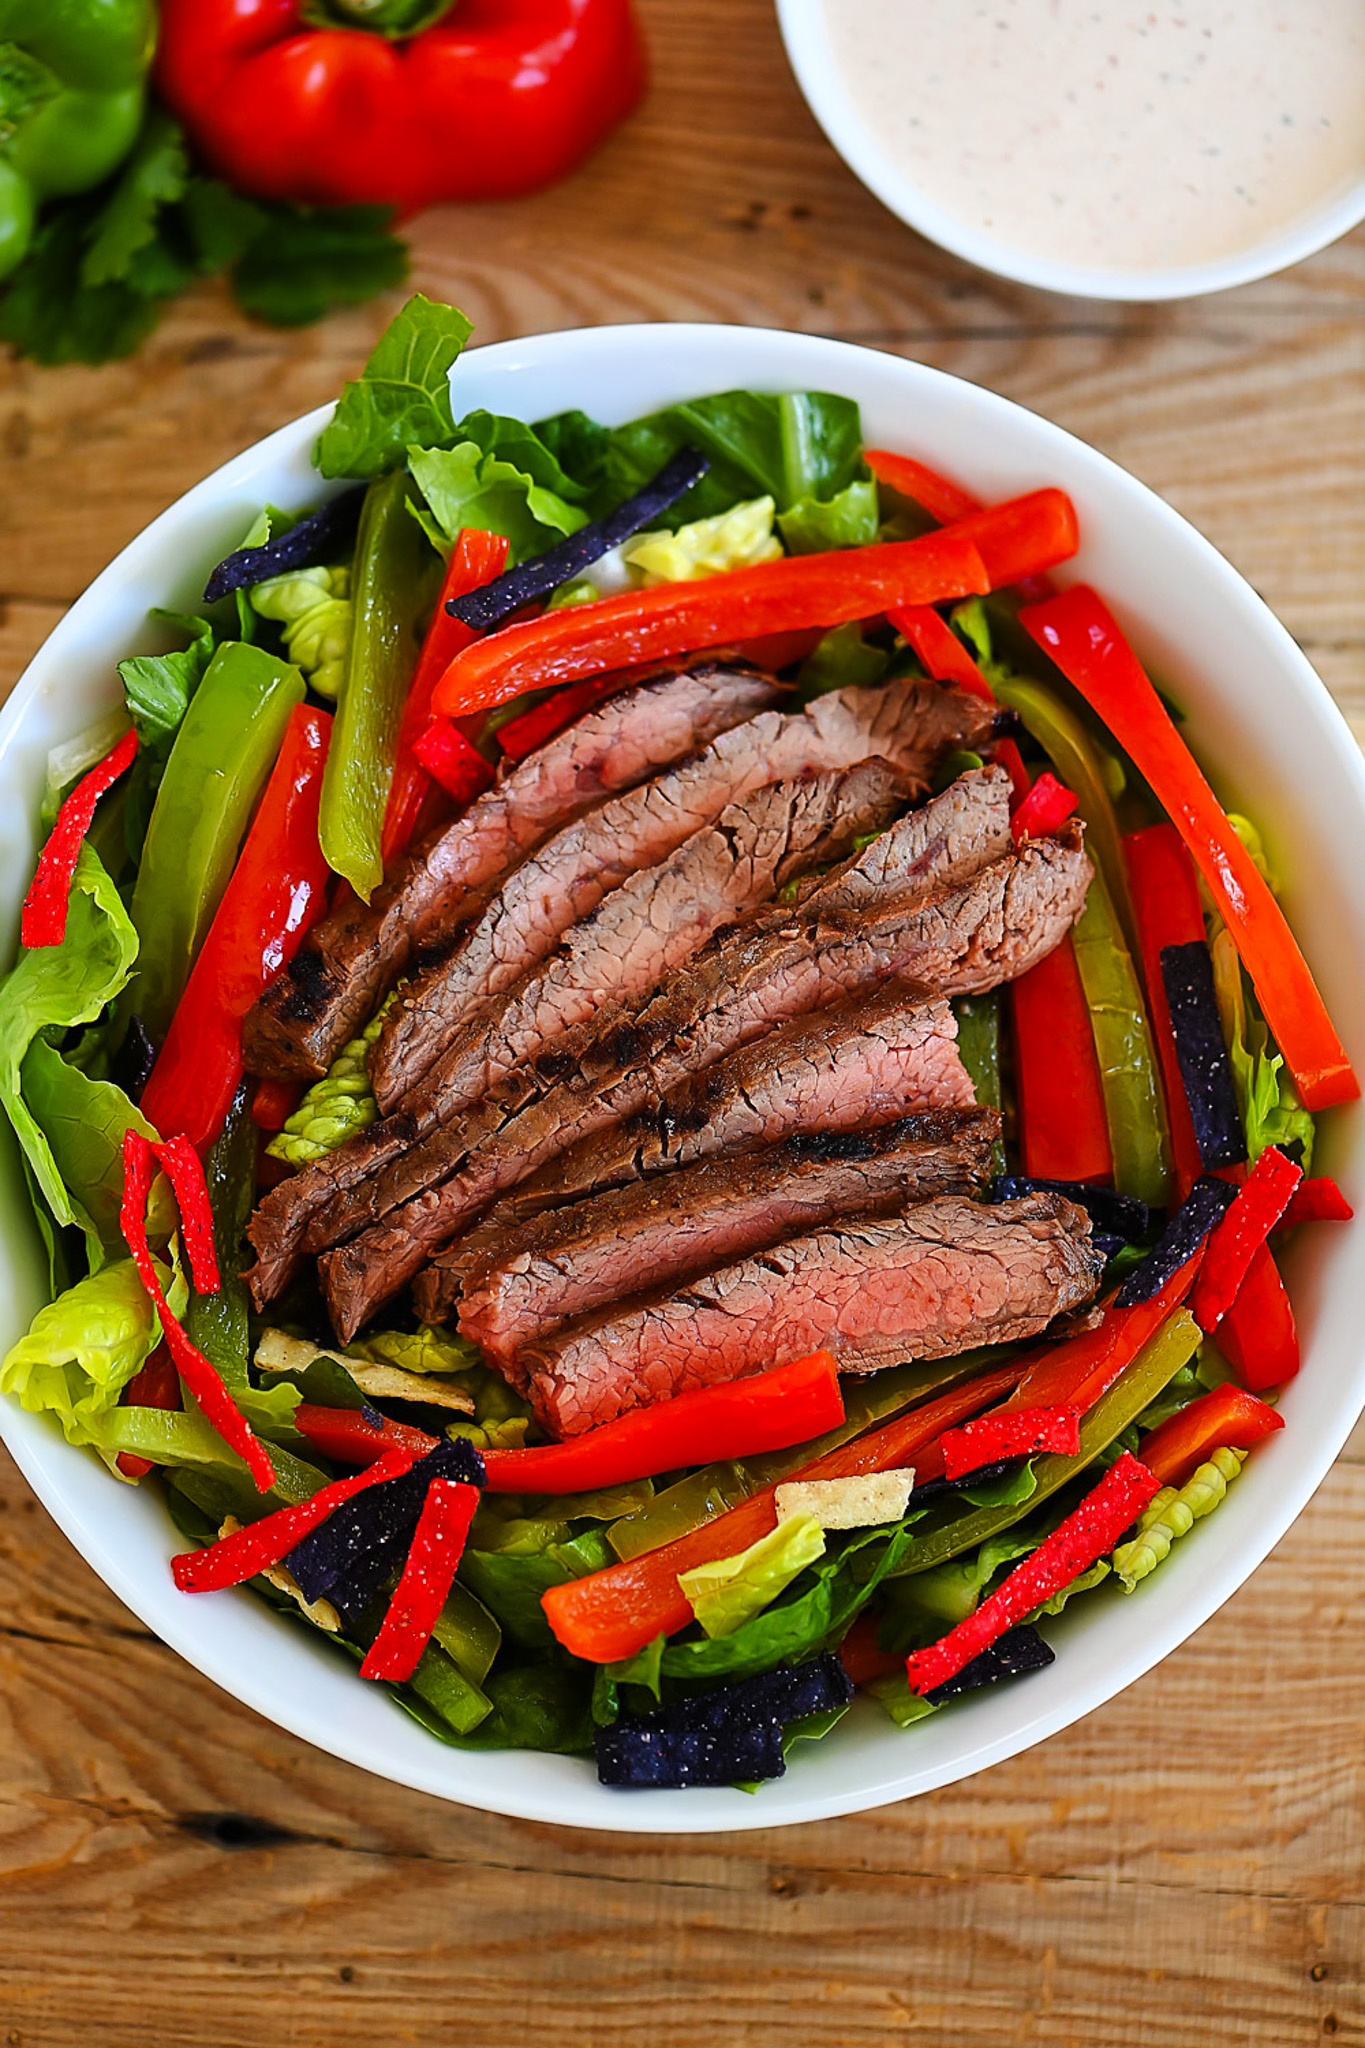 Fajita salad with steak